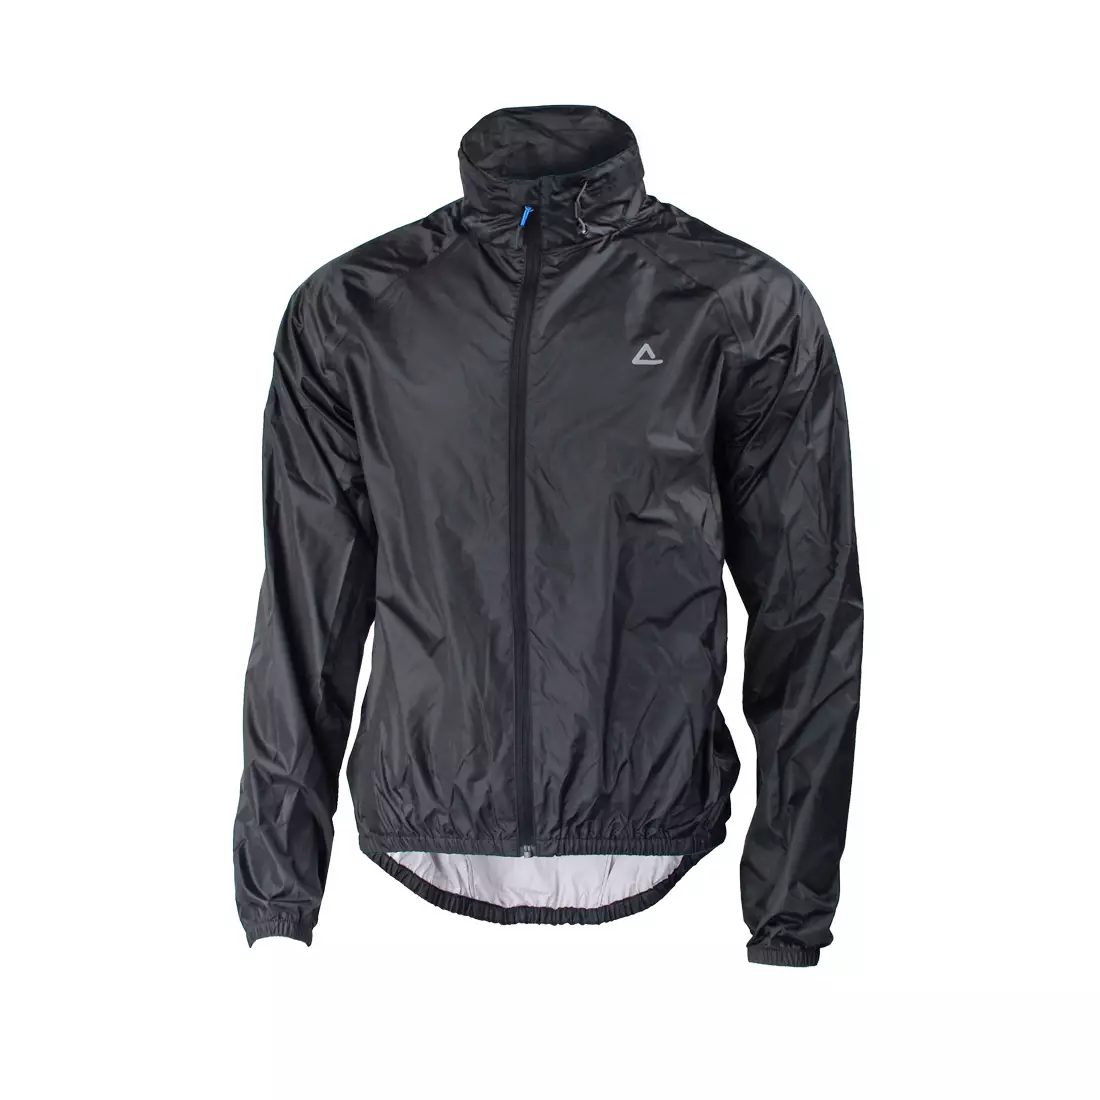 DARE 2B - AQ-LITE JACKET DMW063 - ultralight cycling jacket, color: Black